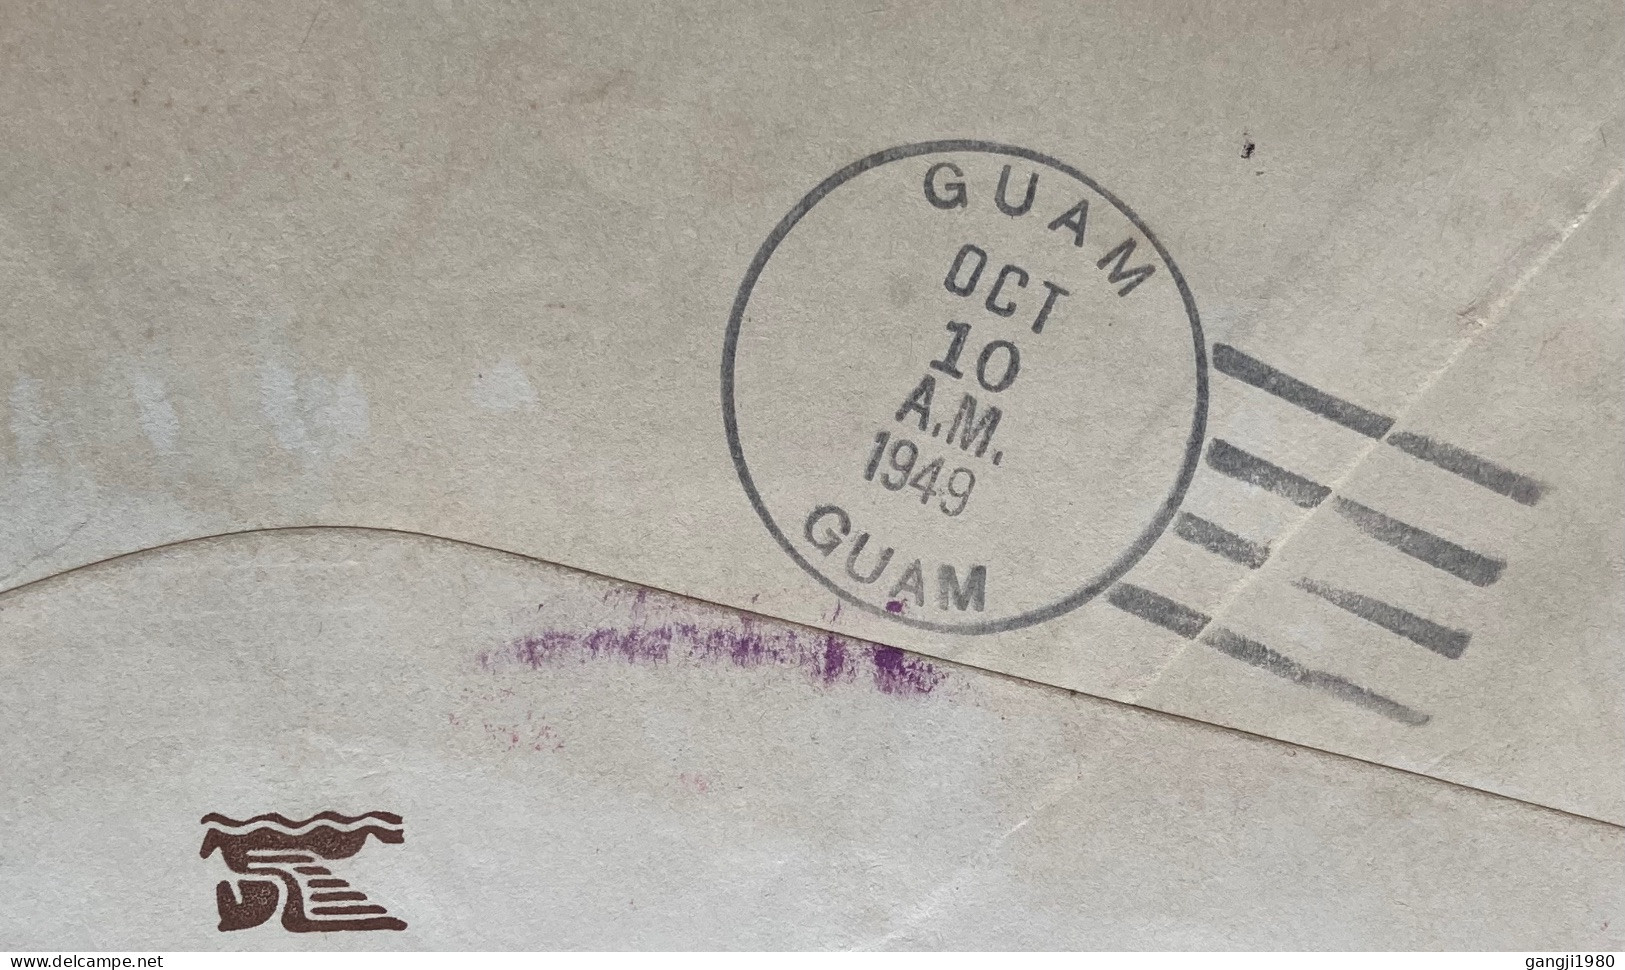 CUBA -GUAM 1949, COVER USED TO  USA VIA GUAM, FORWARED, JOURNAL READER DIGEST, METER MACHINE, BUY CUBAN SUGAR, HAVANA CI - Briefe U. Dokumente